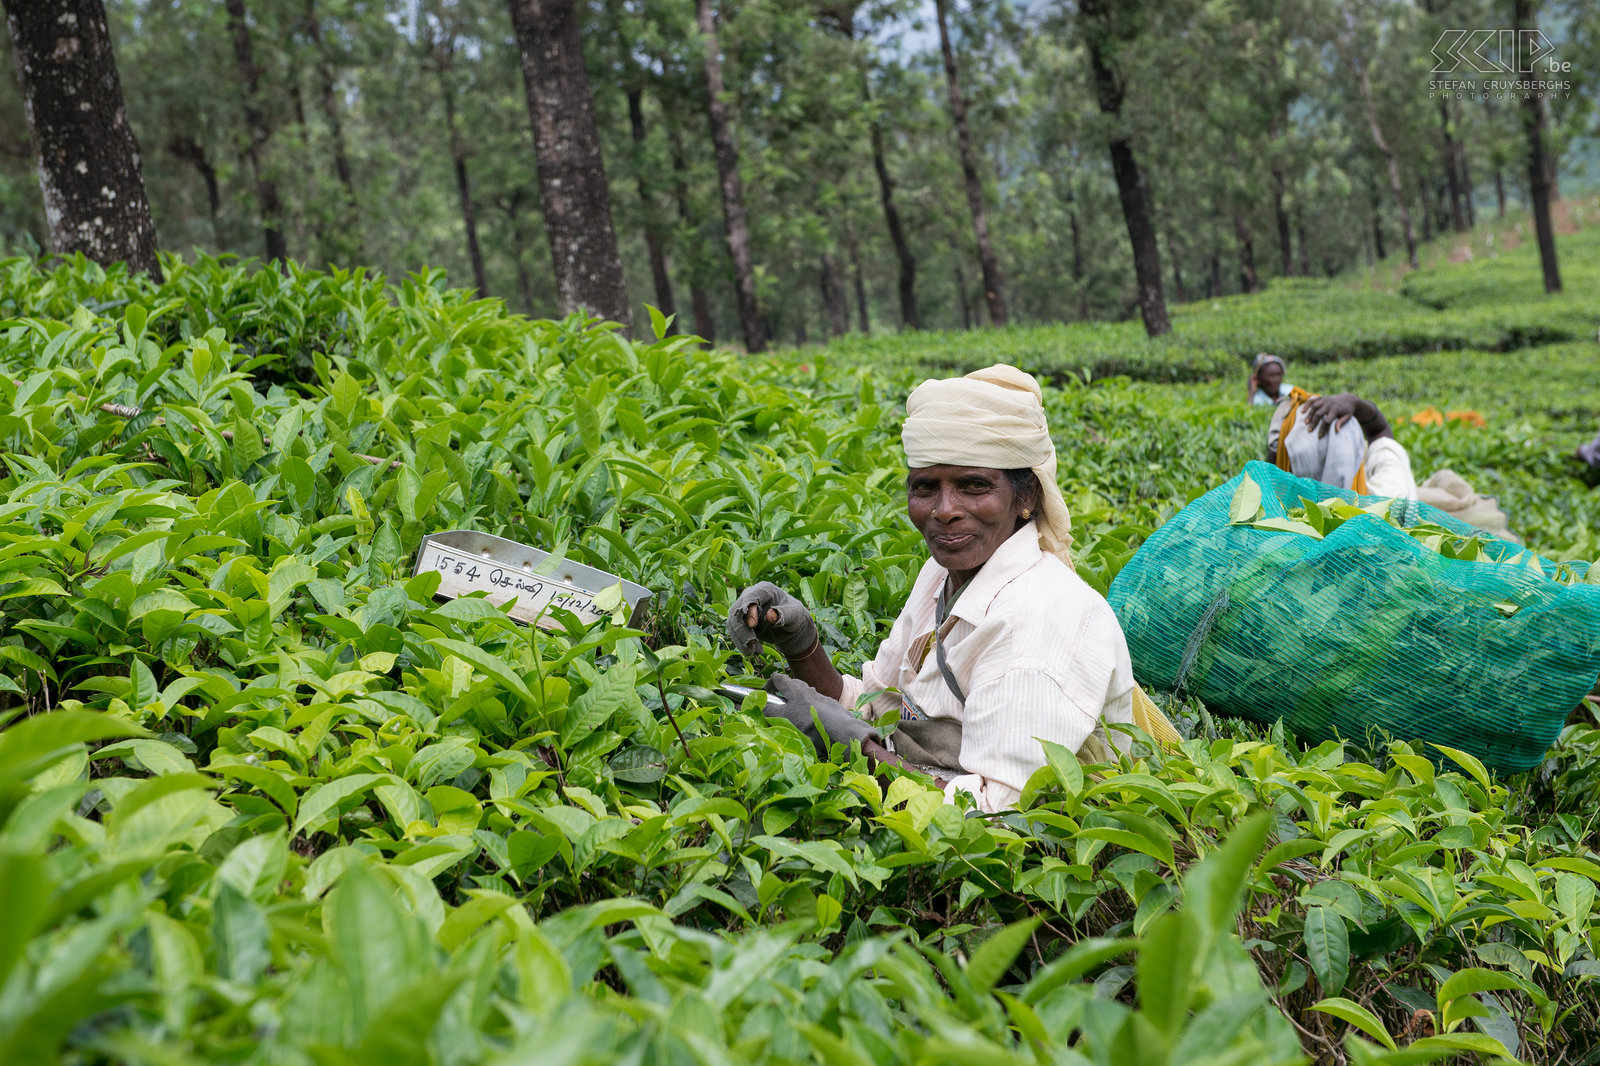 Valparai - Tea fields - Picker Indian woman picks the tea leaves in a tea plantation in Valparai in the Western Ghats mountains in Tamil Nadu. Stefan Cruysberghs